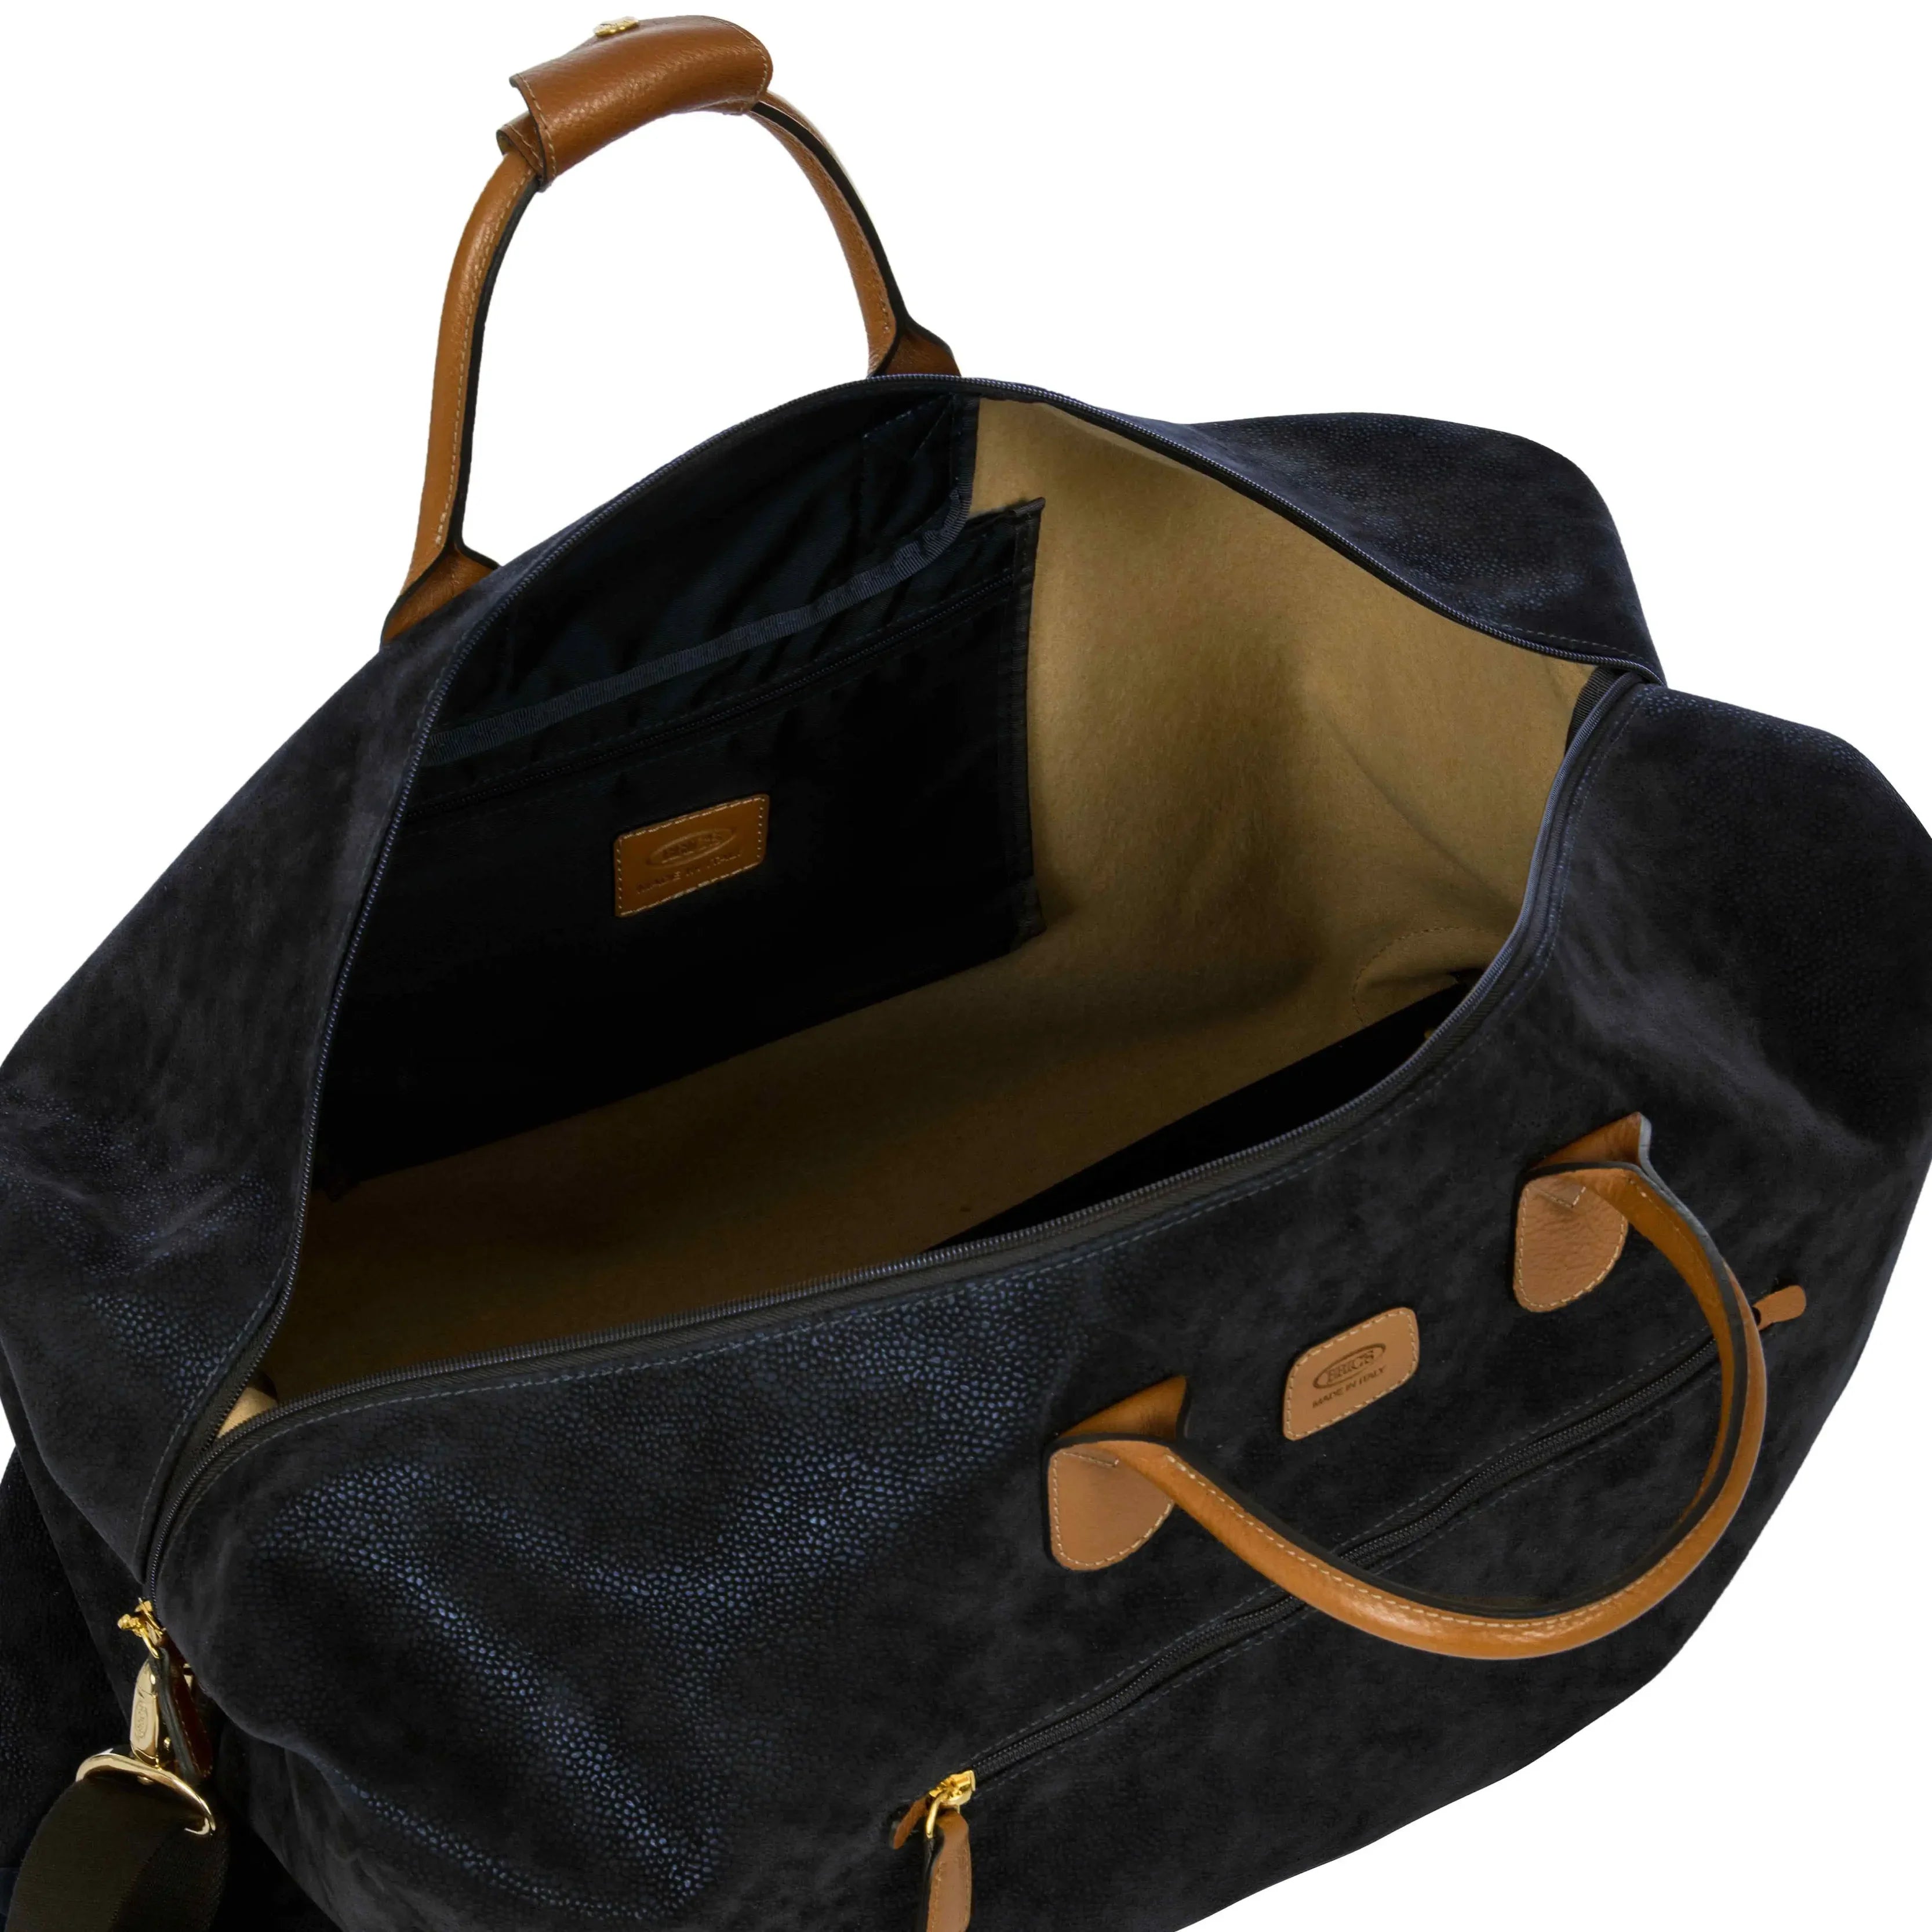 Brics Life Travel Bag 65 cm - Camel